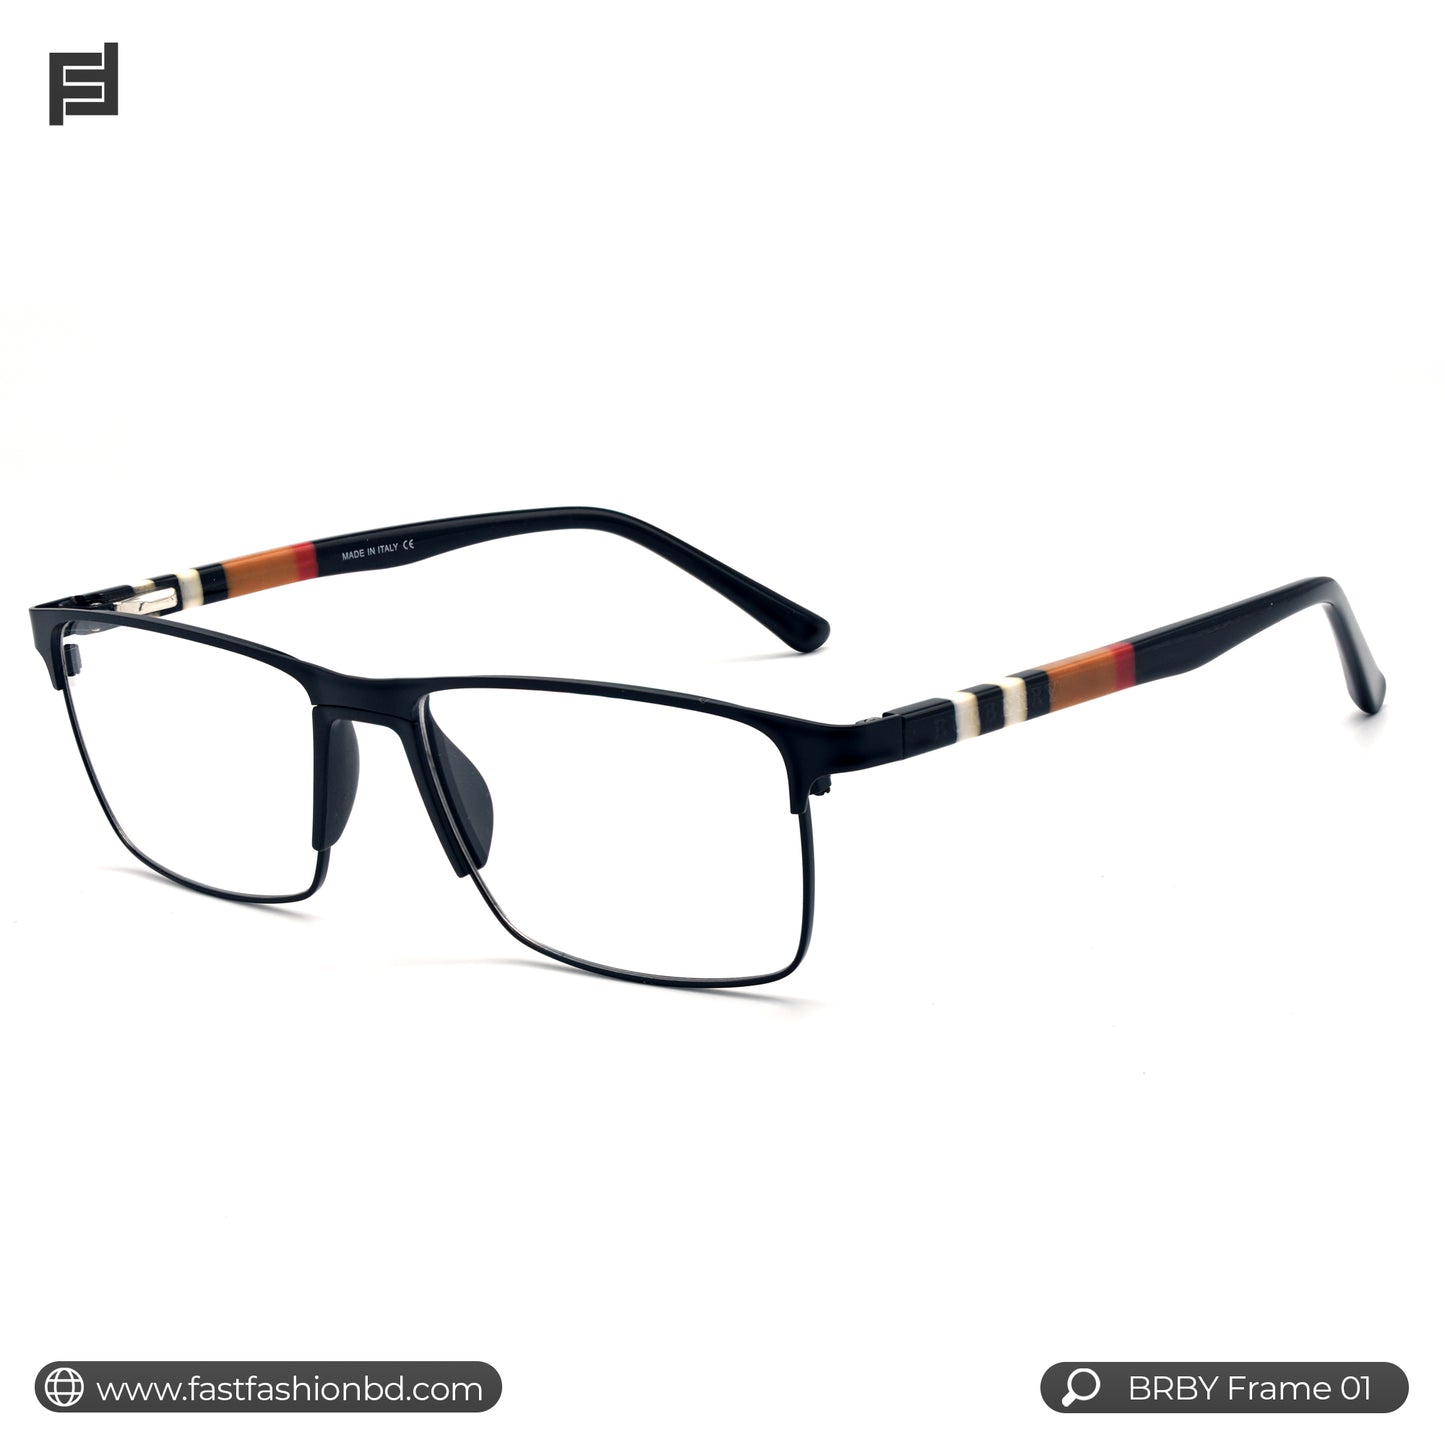 Premium Quality Eyeglass Optic Frame - BRBY Frame 01